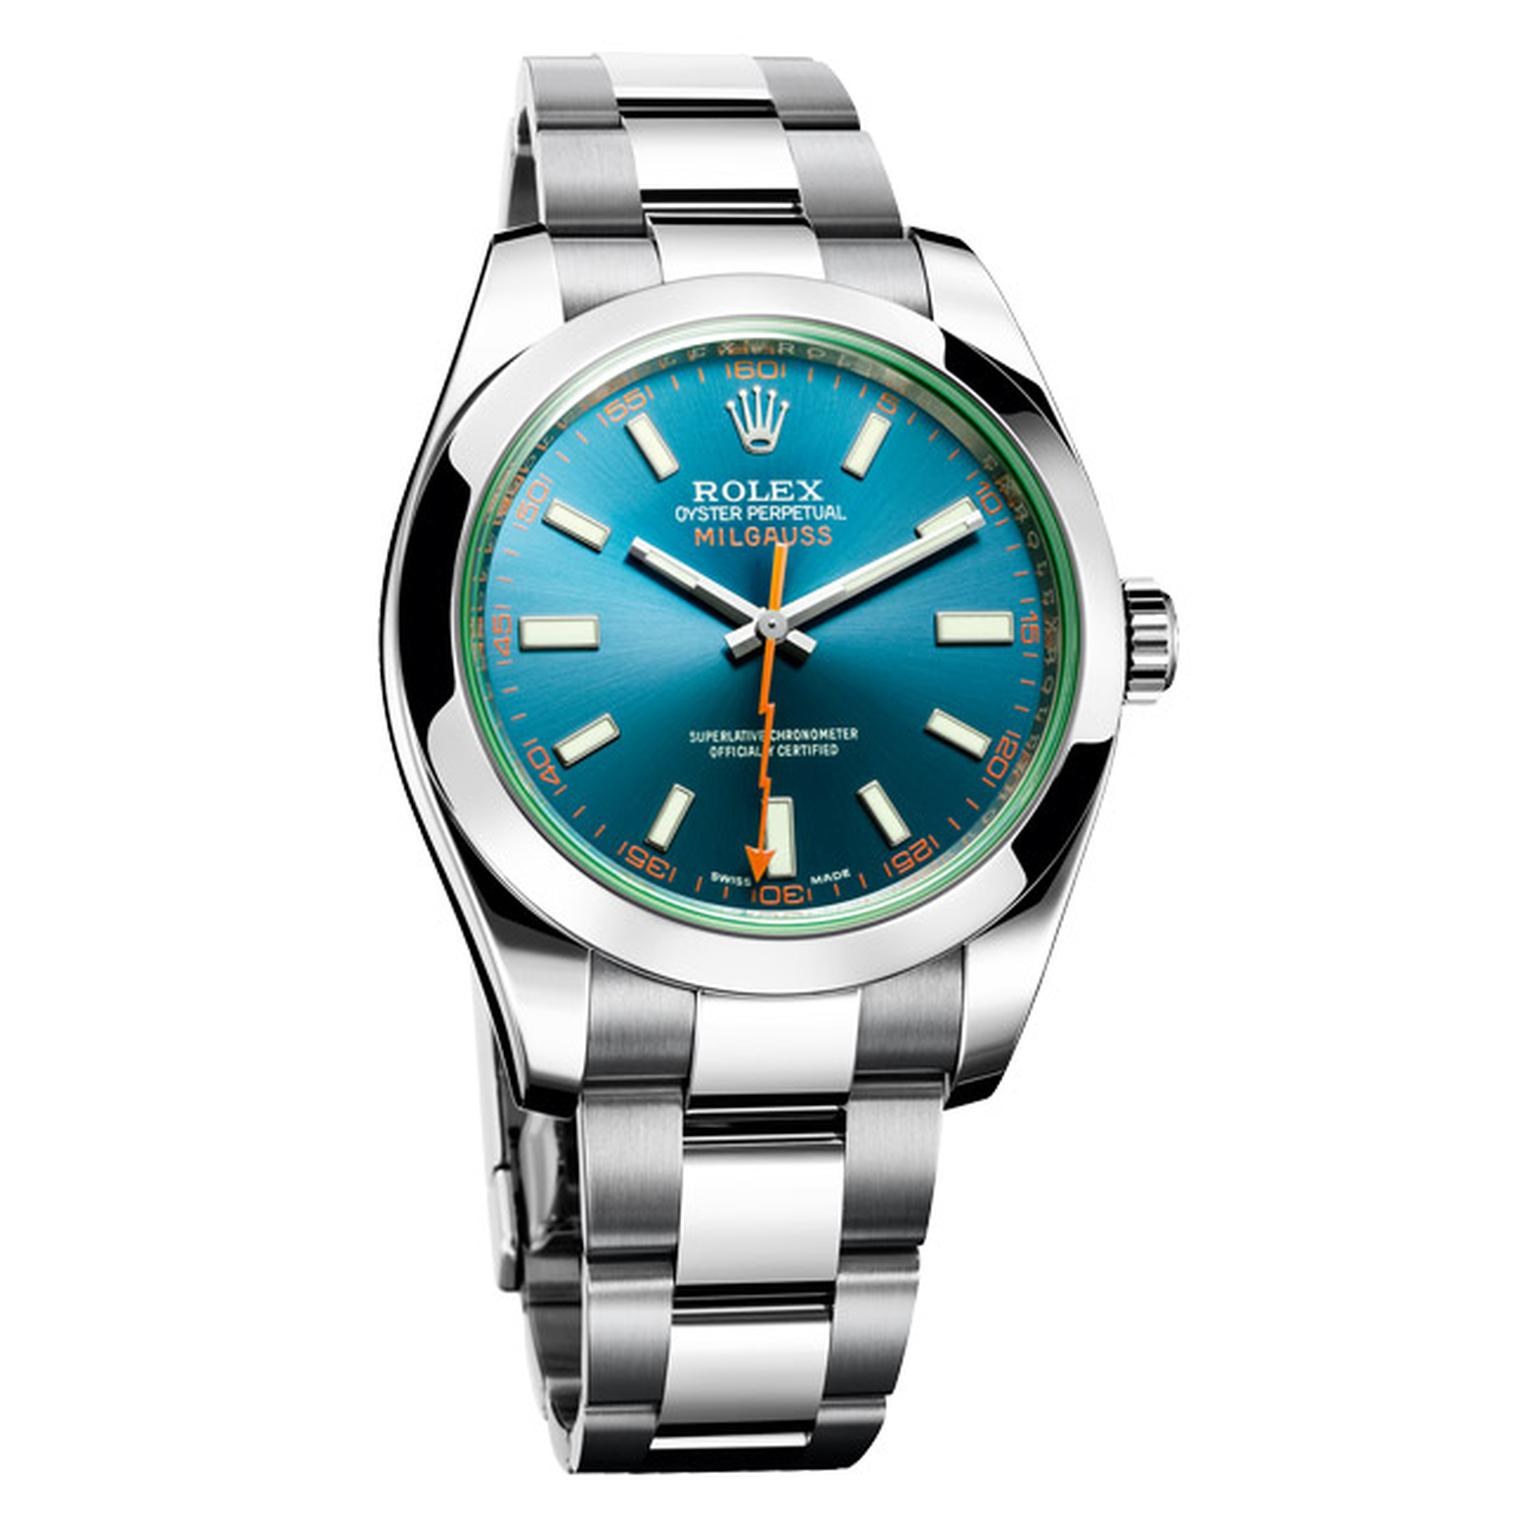 Rolex Milgauss Z-blue watch